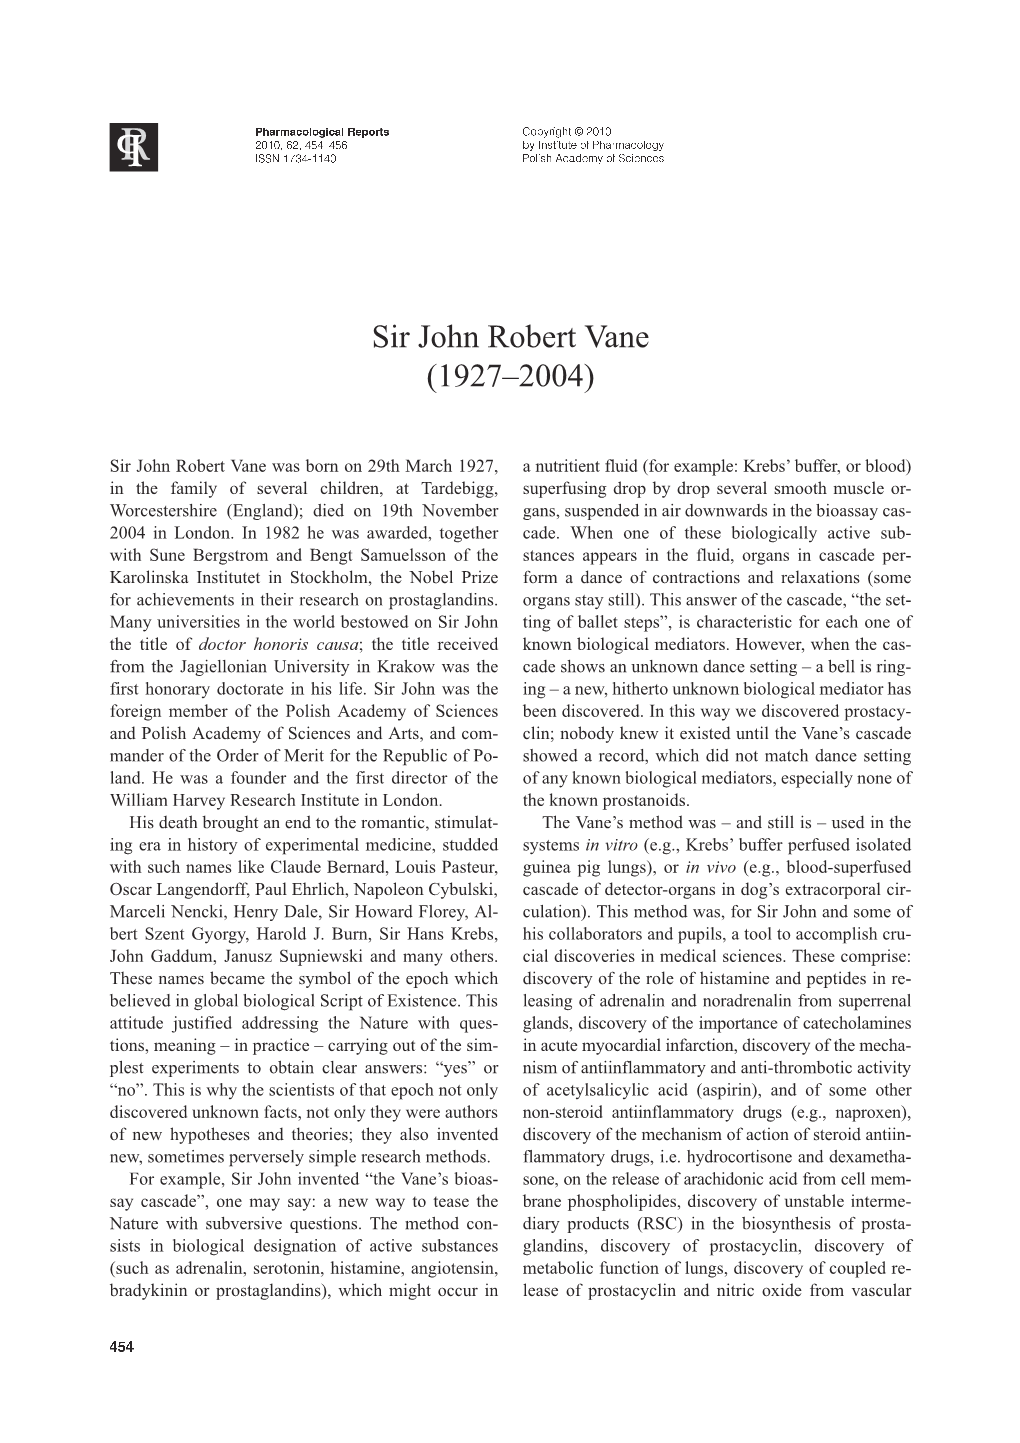 Sir John Robert Vane (1927–2004)